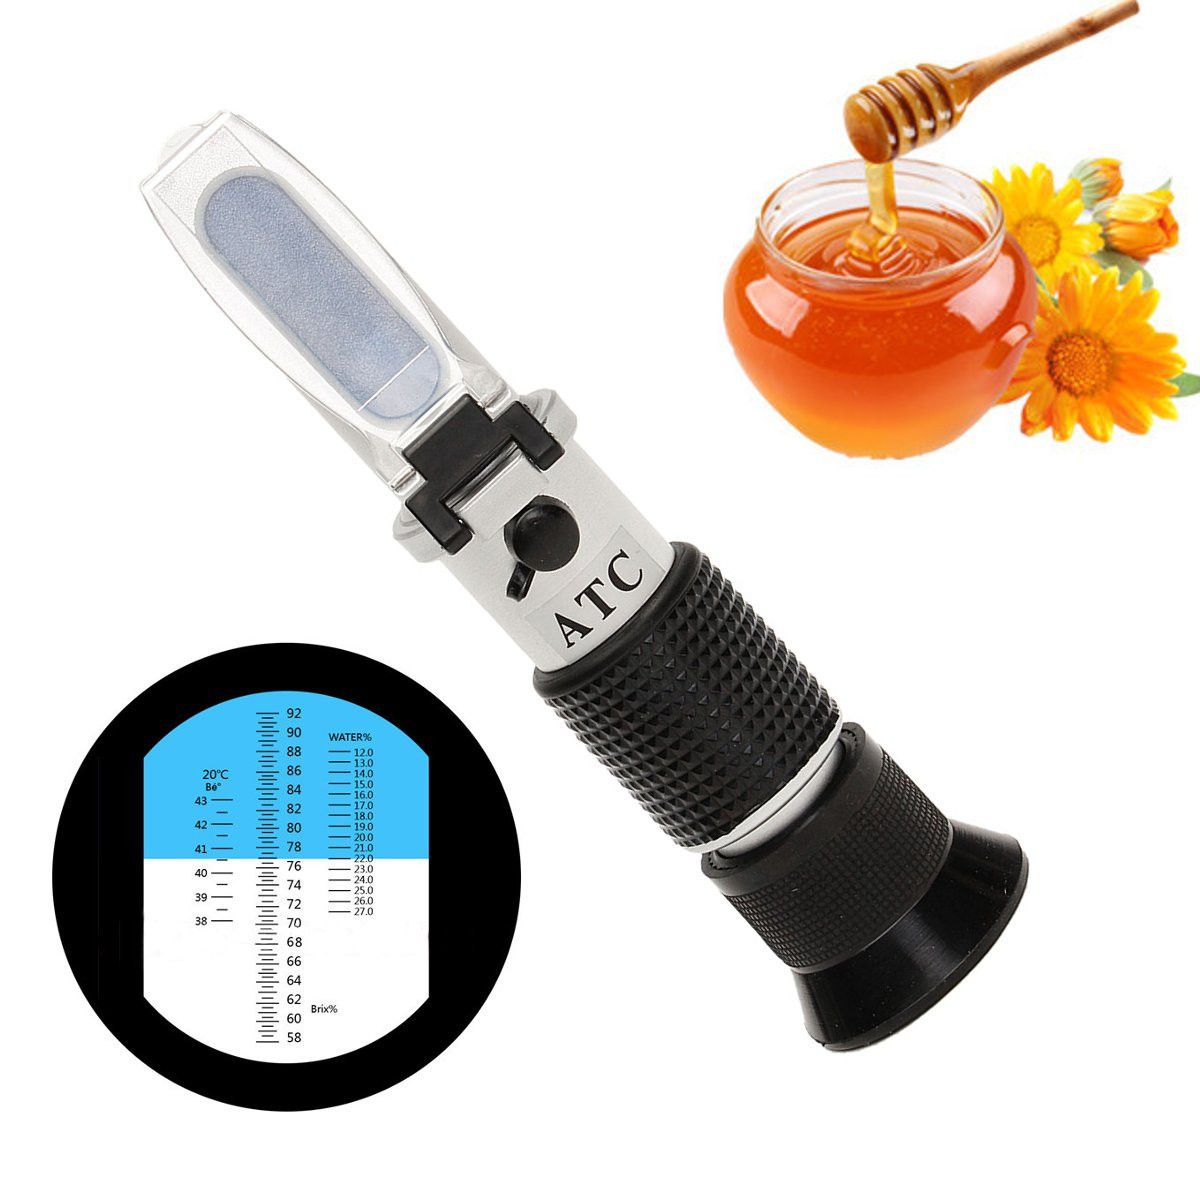 58-90-Portable-Baume-Honey-Sugar-Brix-Refractometer-Hand-Held-Tester-Hard-Case-1059559